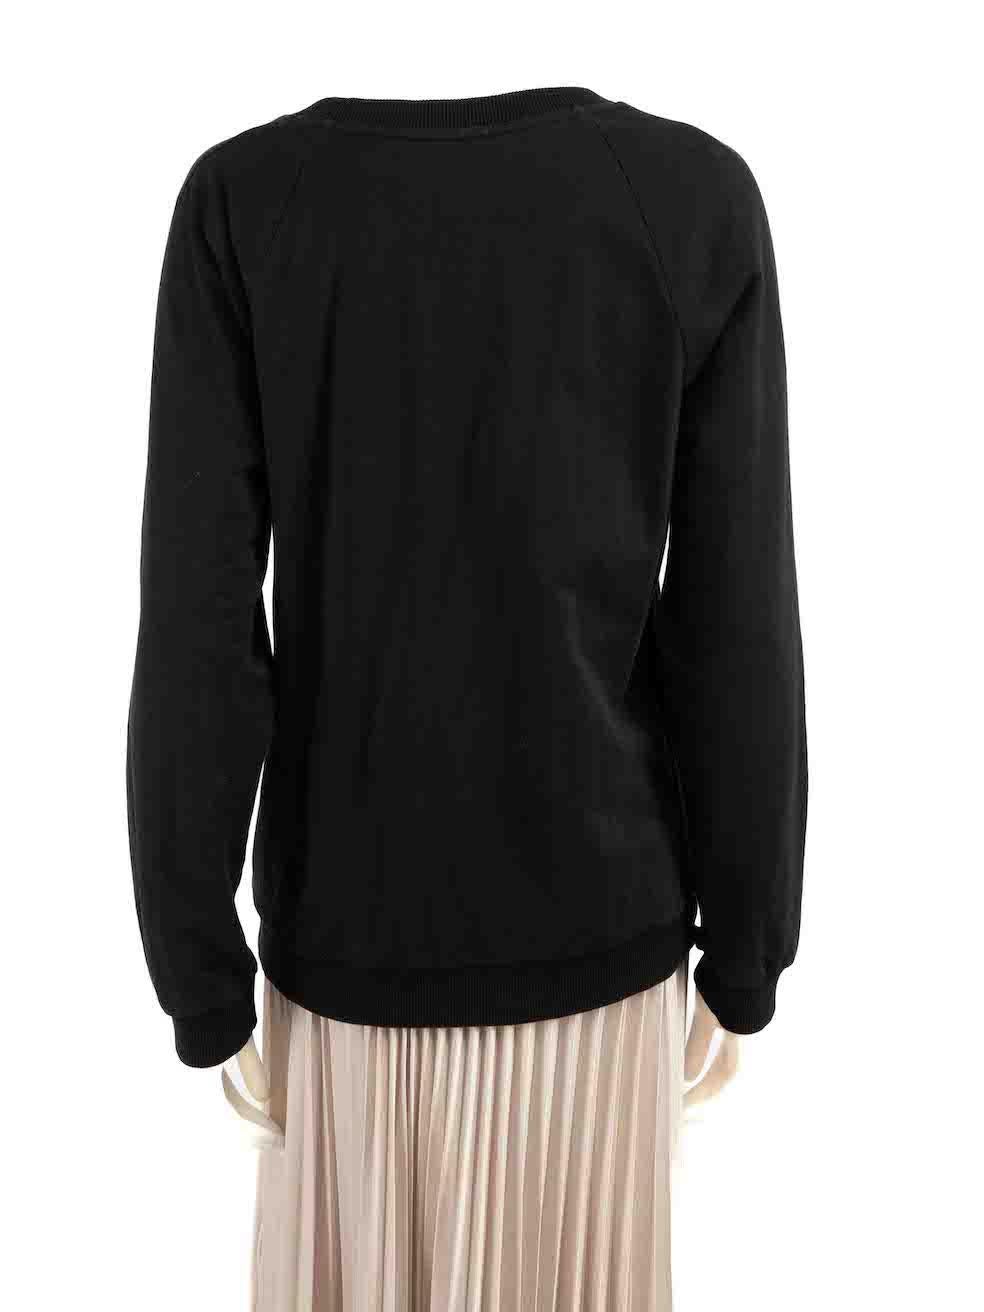 Balmain Black Flocked Logo Detail Sweatshirt Size XS In Good Condition For Sale In London, GB